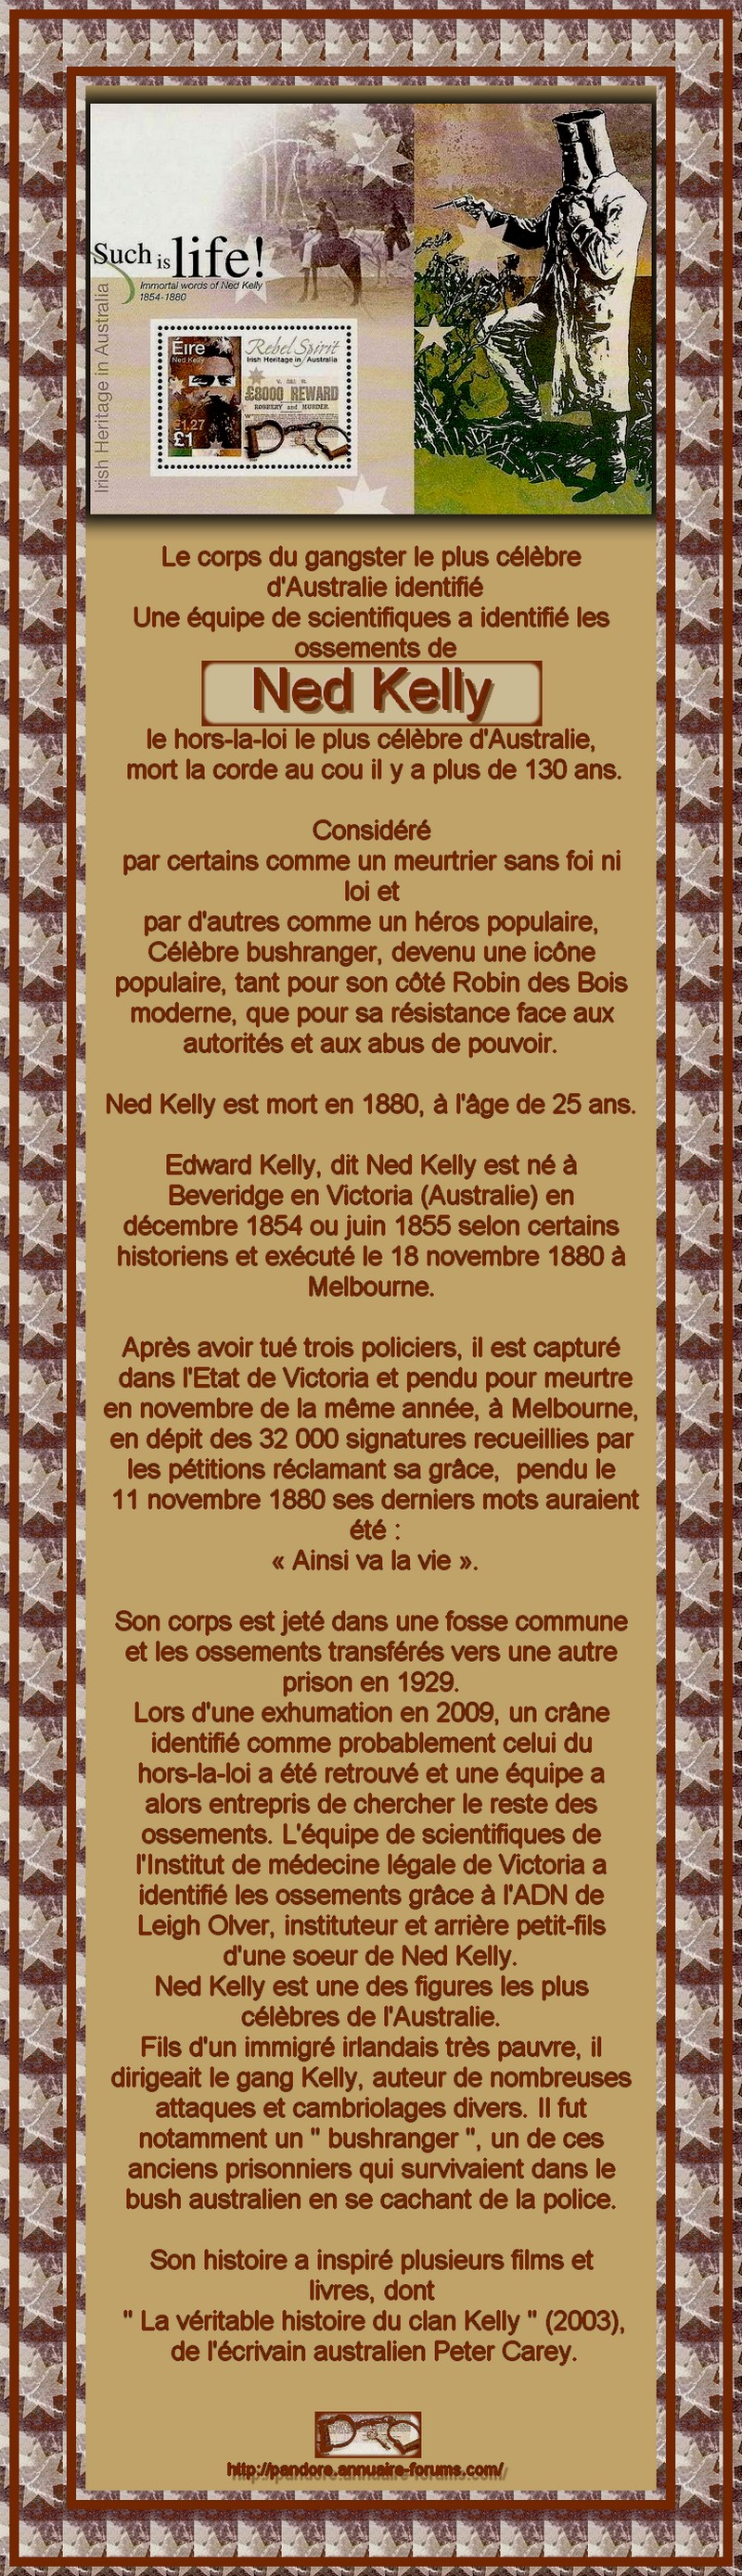 NED KELLY - ROBIN DES BOIS AUSTRALIEN SENTENCE  PENDAISON ET FOSSE COMMUNE - 1854 A 1880 1109010950451369128677679